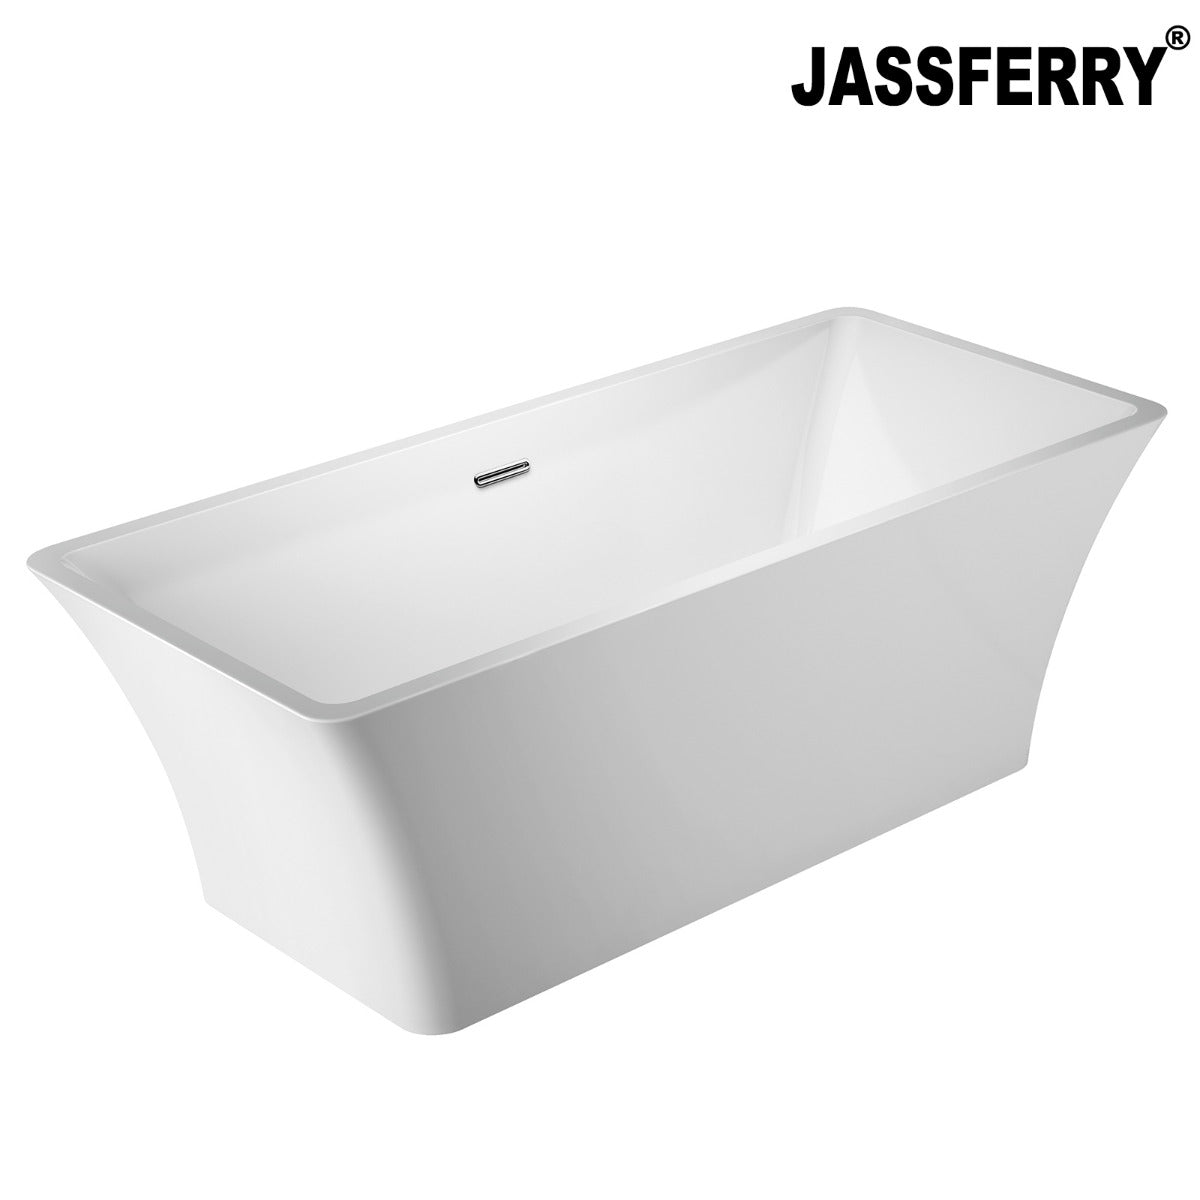 JassferryJASSFERRY Contemporary Freestanding Bathtub Luxury Rectangular Hourglass DesignBathtubs